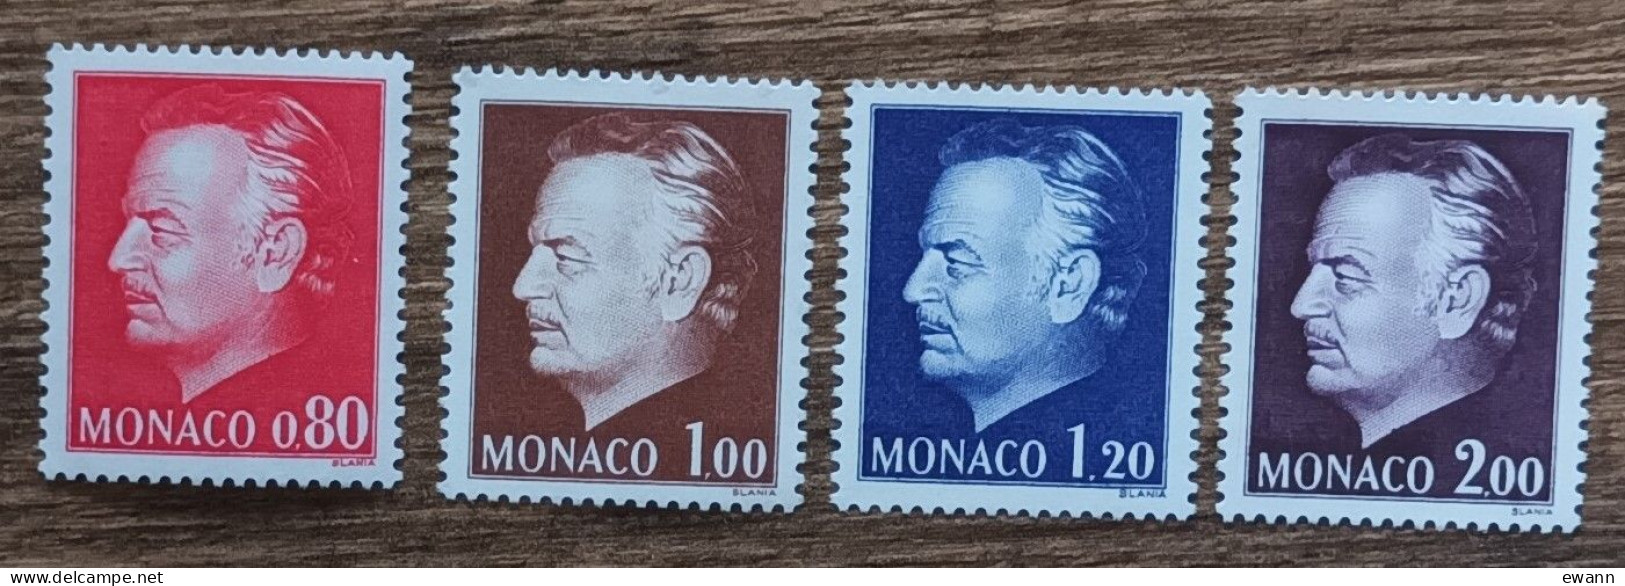 Monaco - YT N°993 à 996 - Nouvelle Effigie Du Prince Rainier III - 1974 - Neuf - Nuovi